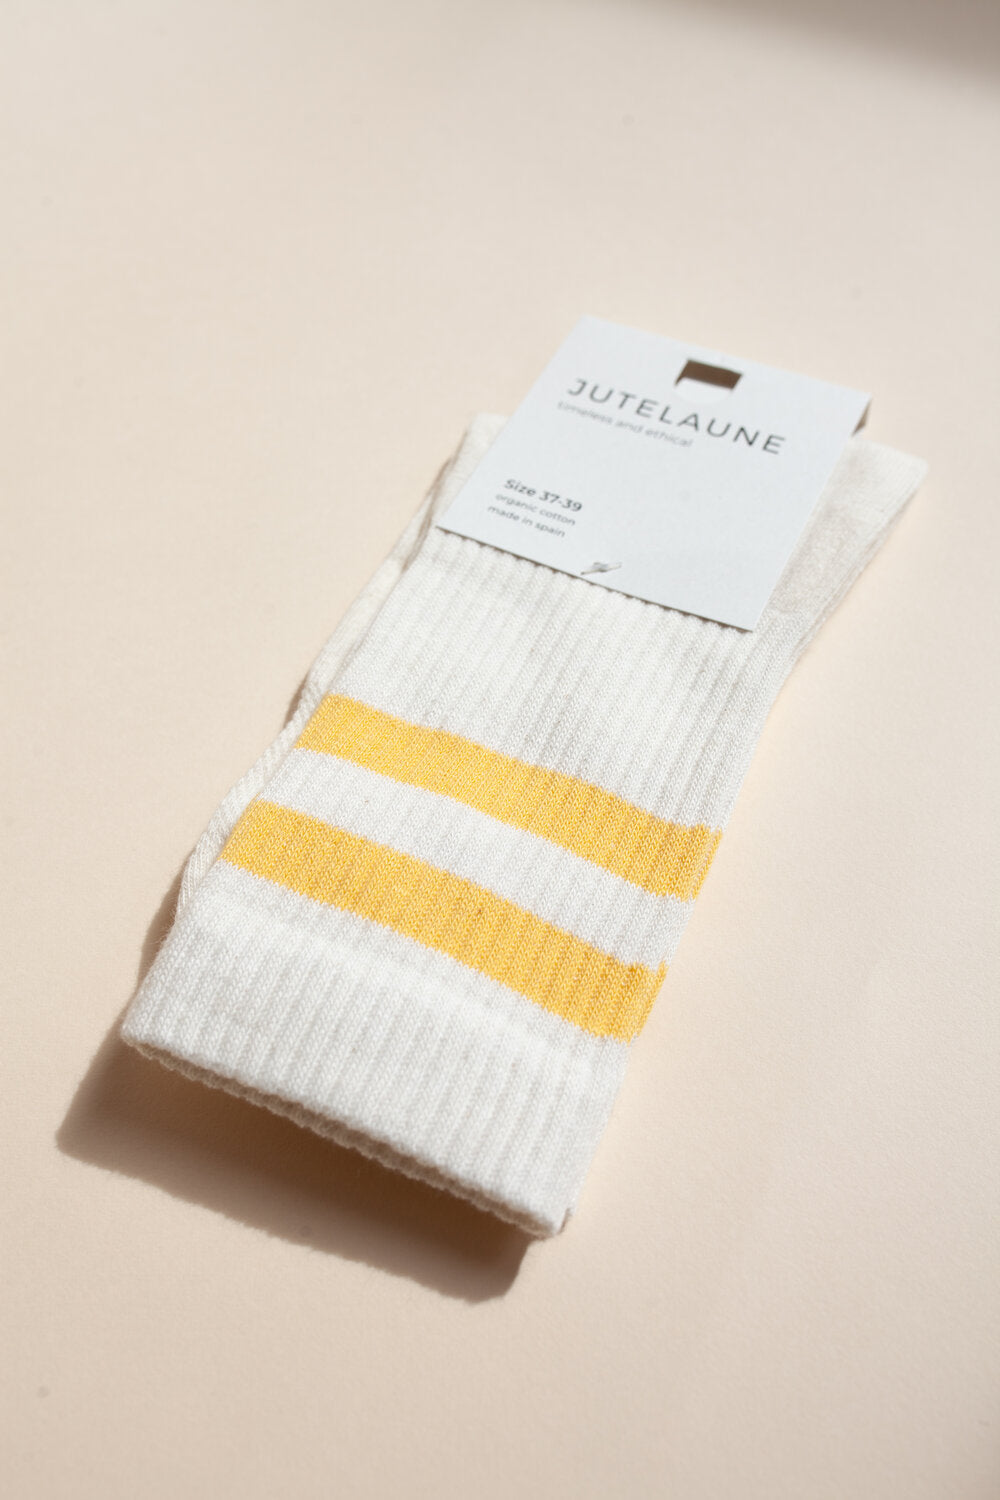 The Yellow Socks